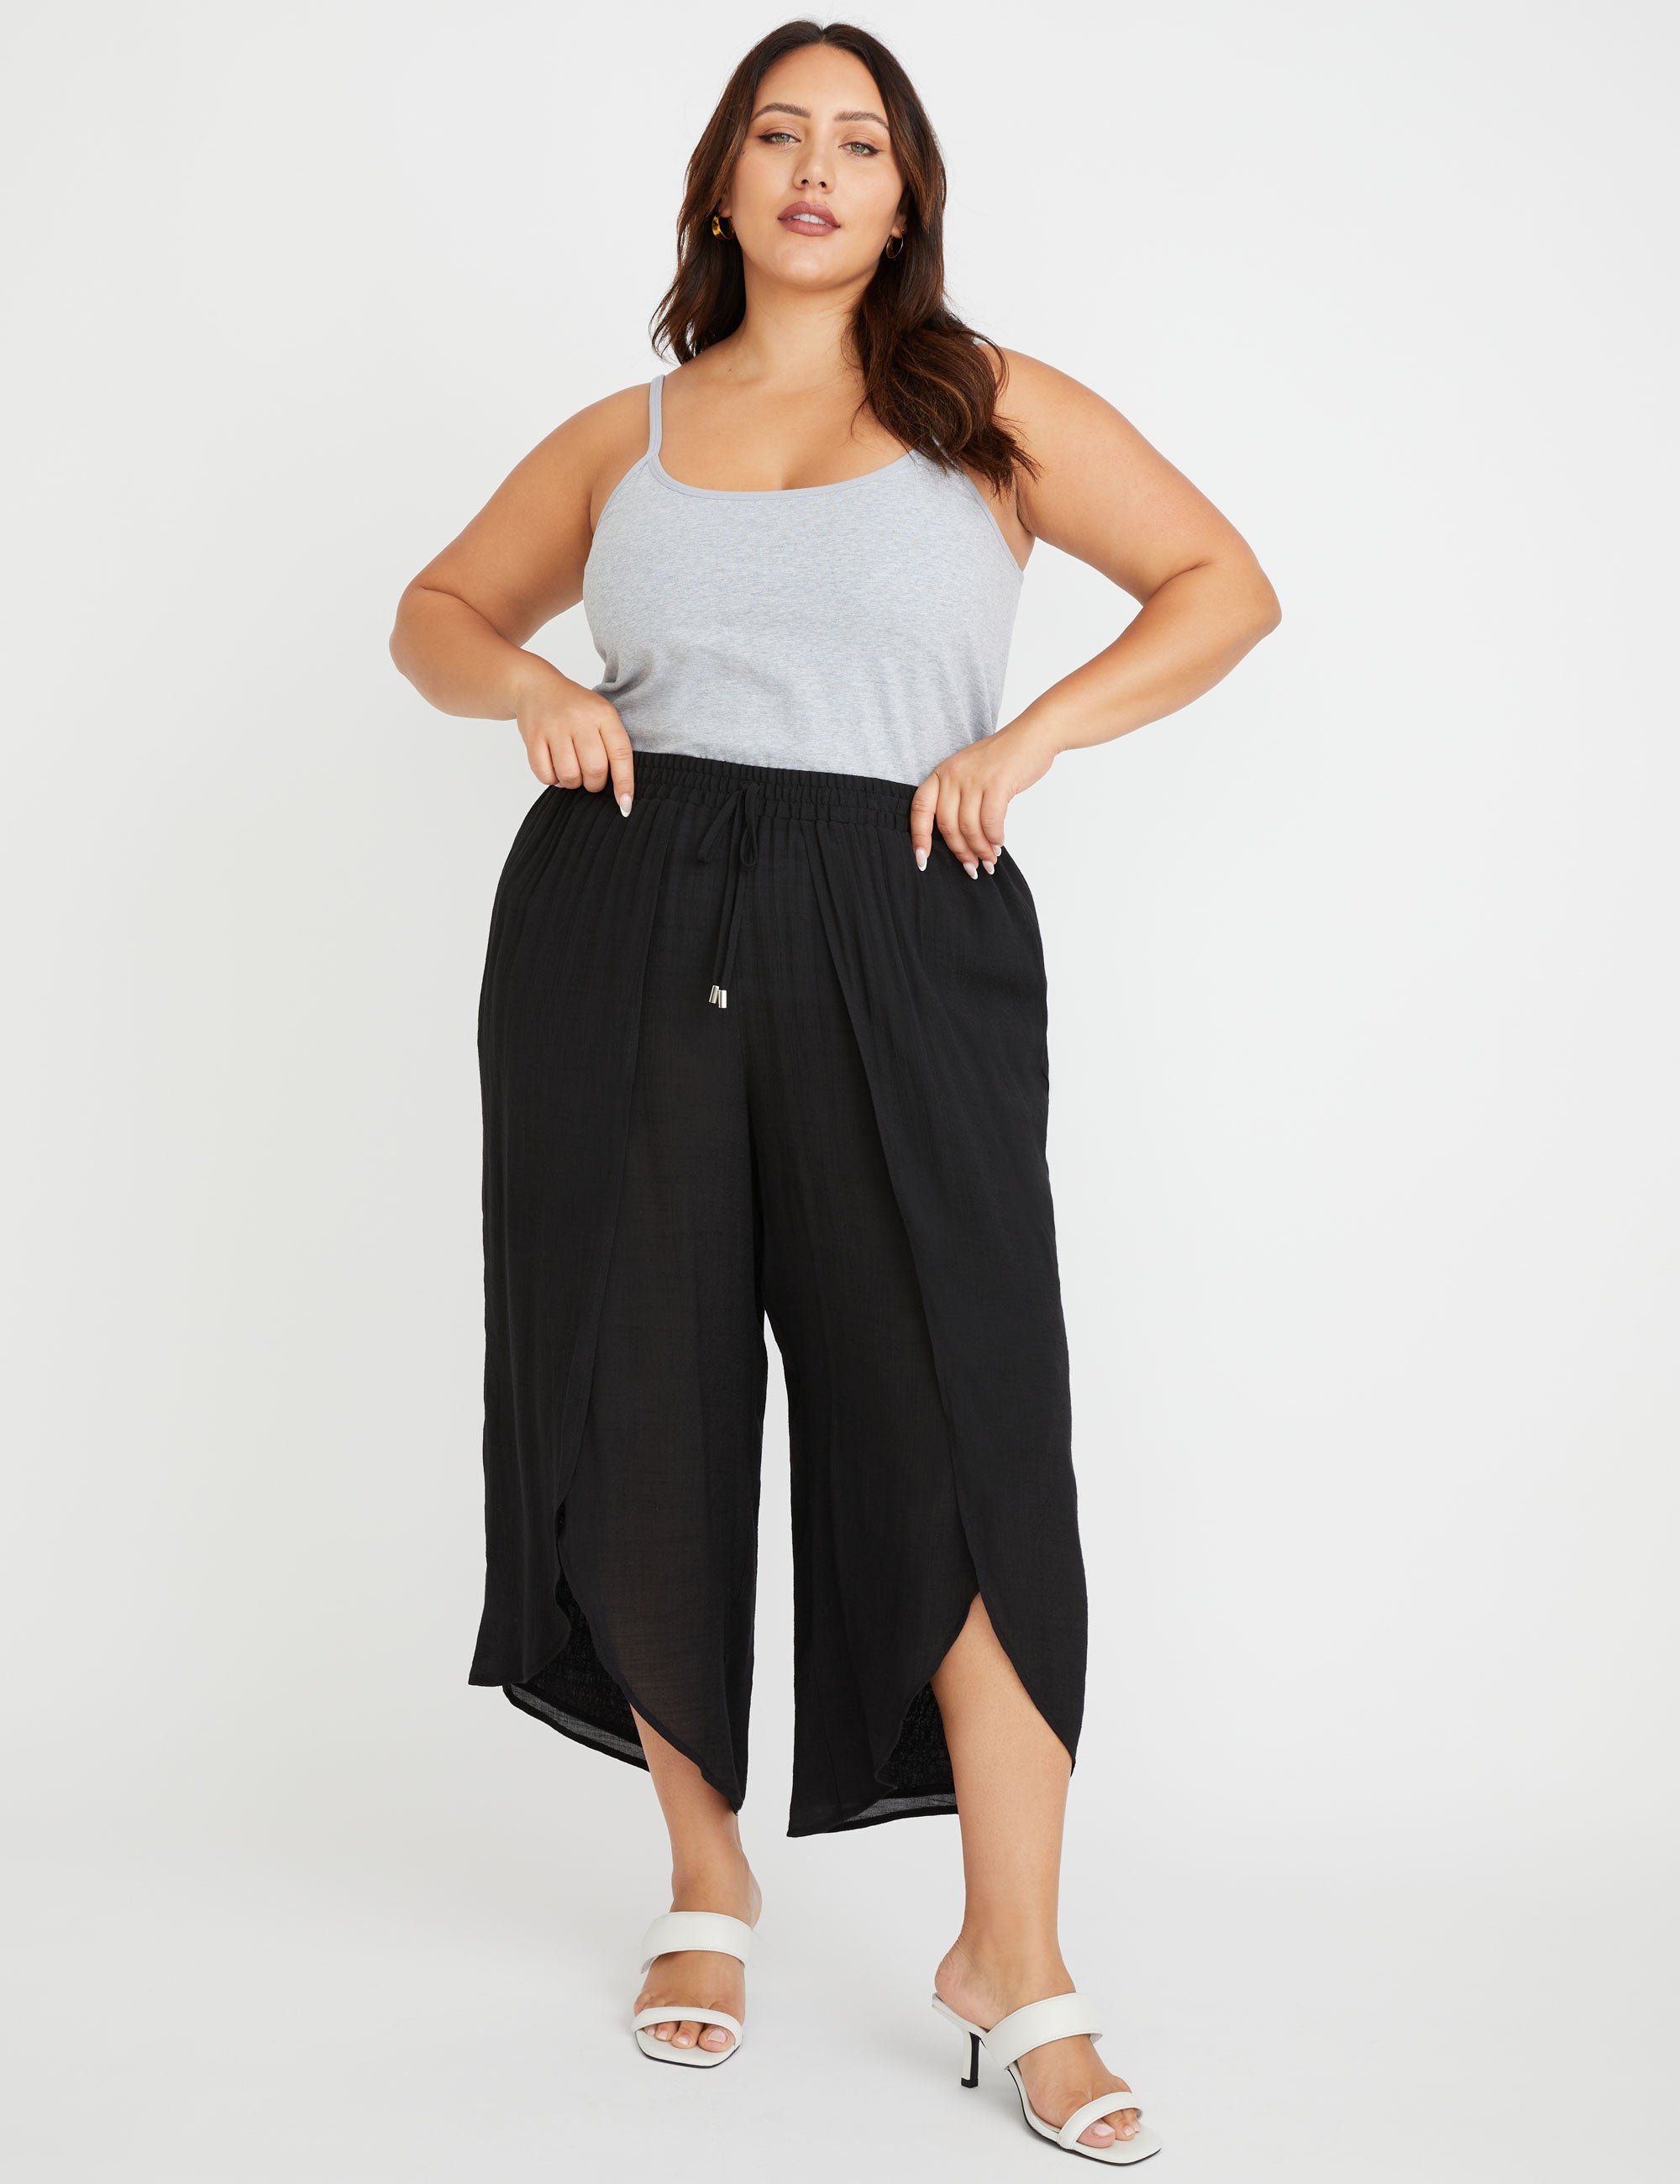 Plus Size Pants for Women Online in NZ - Beme